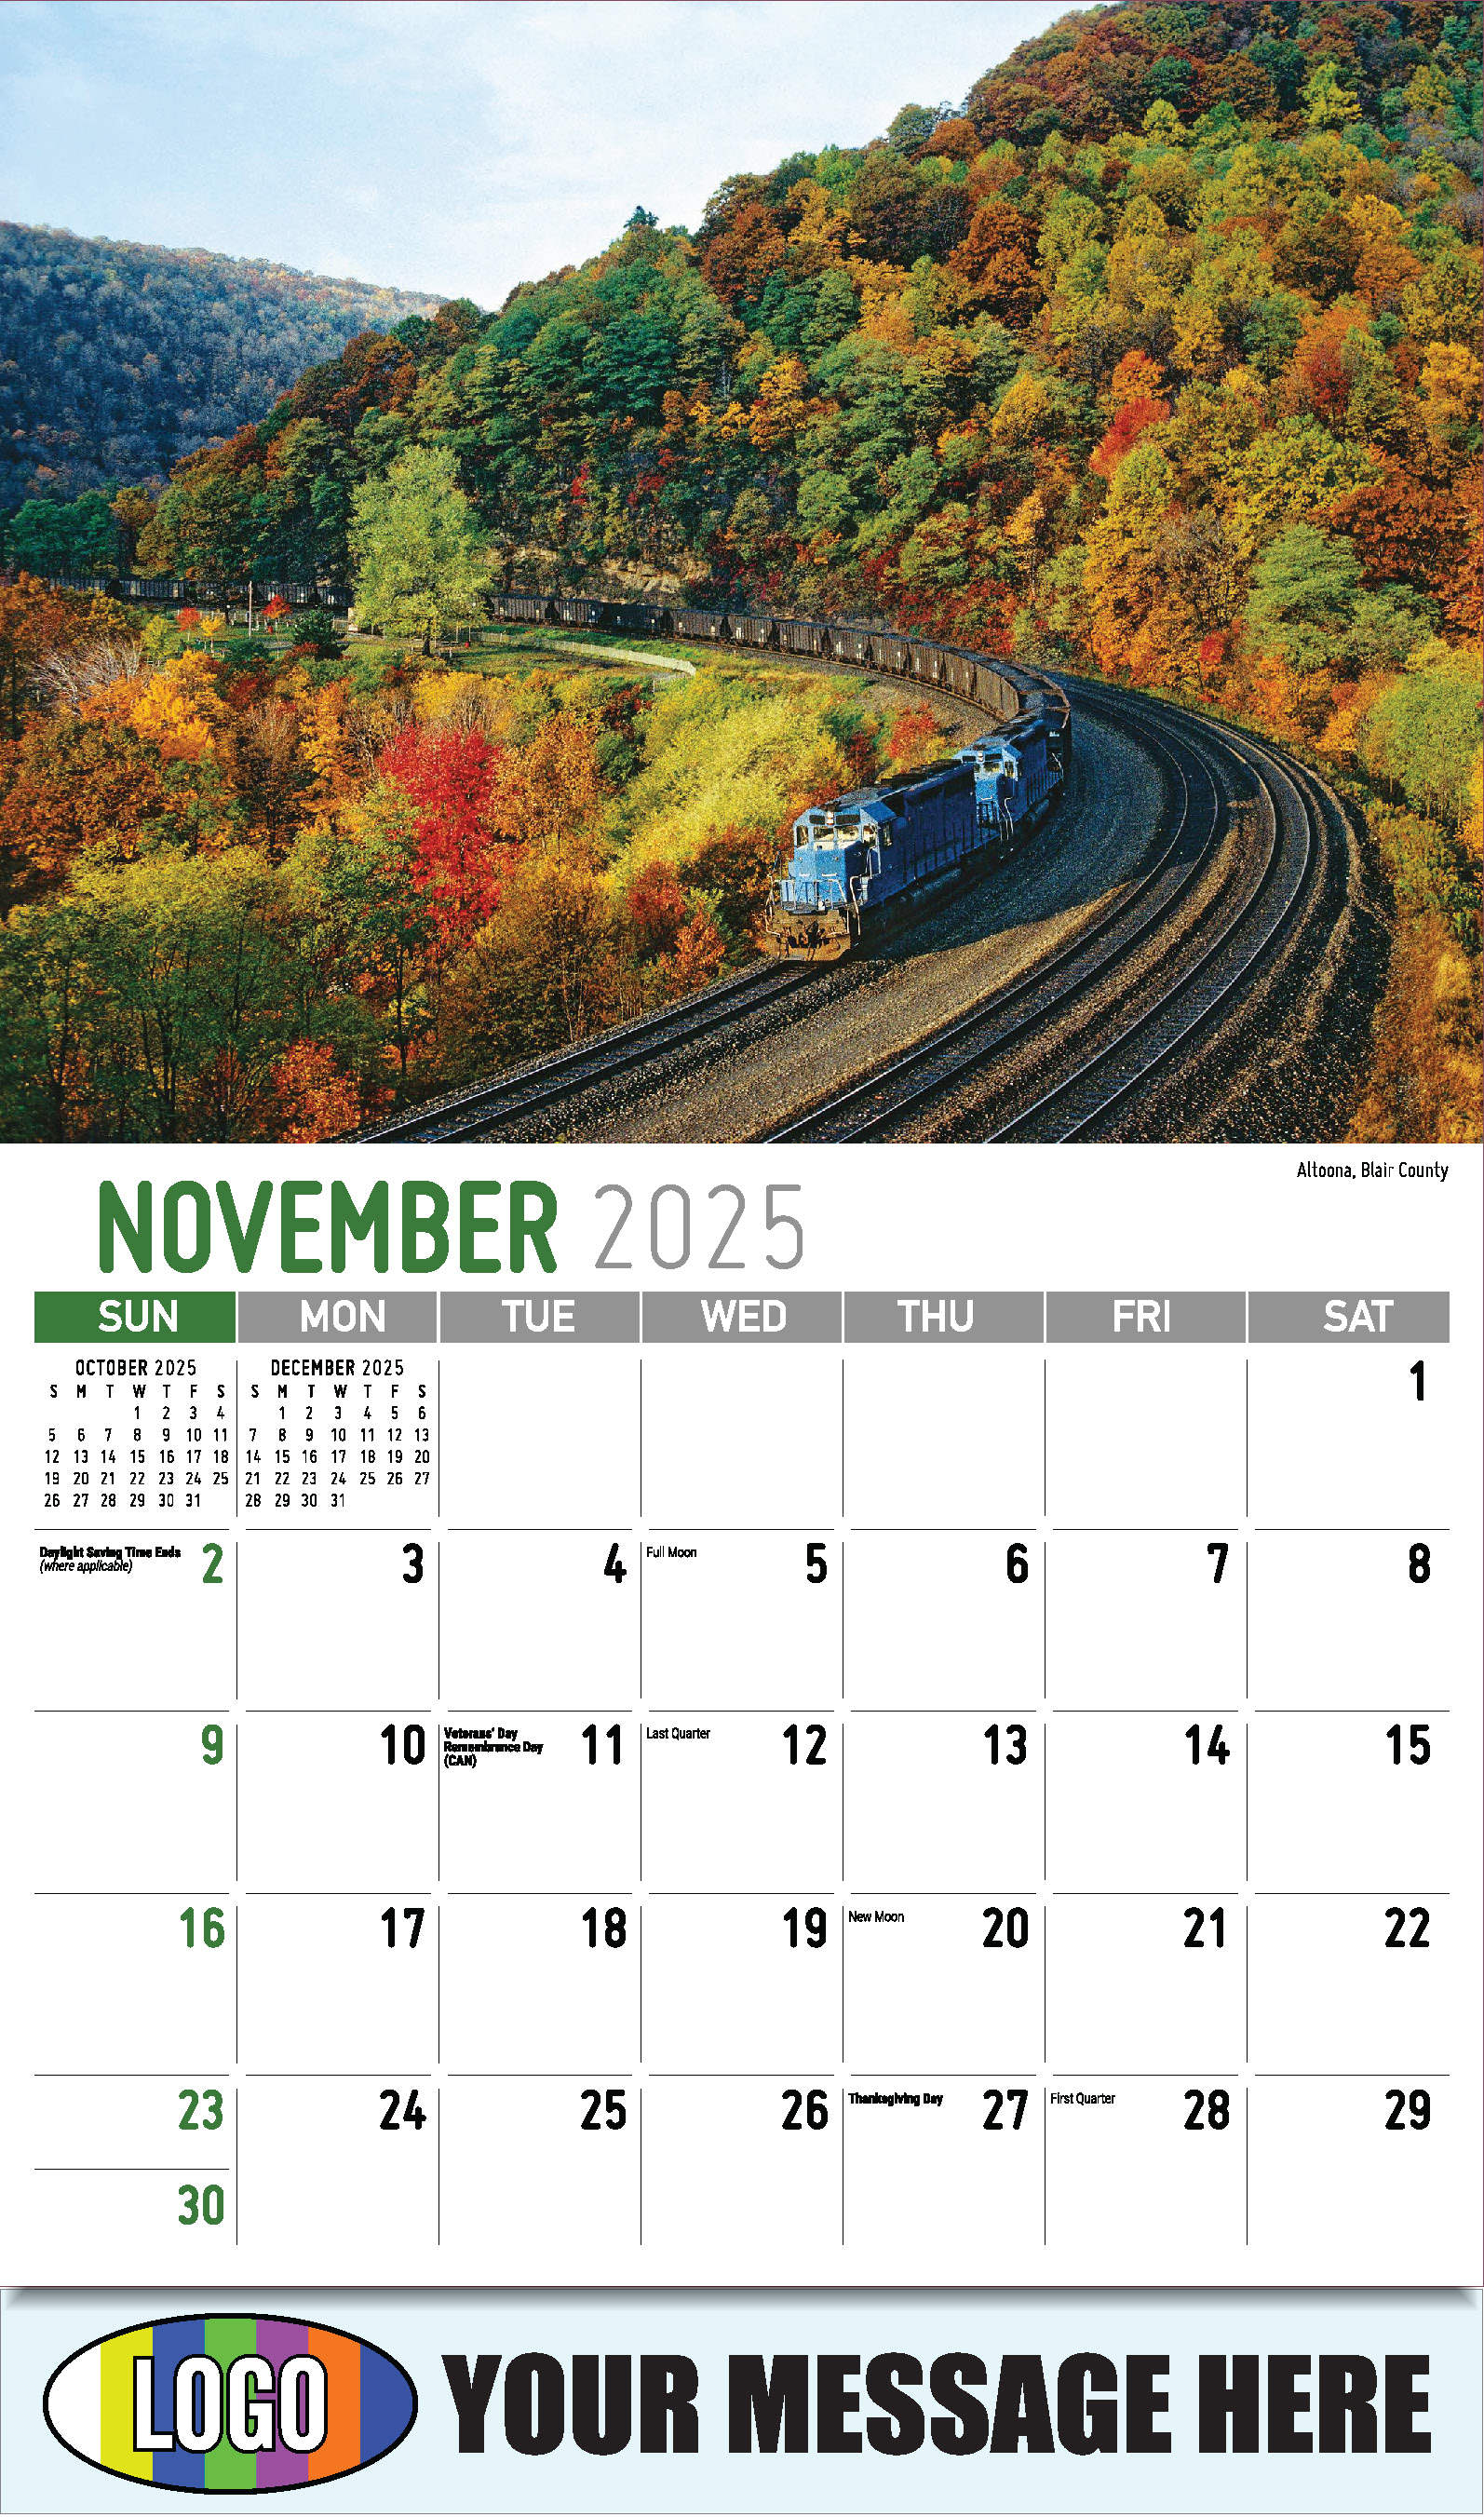 Scenes of Pennsylvania 2025 Business Promotion Calendar - November